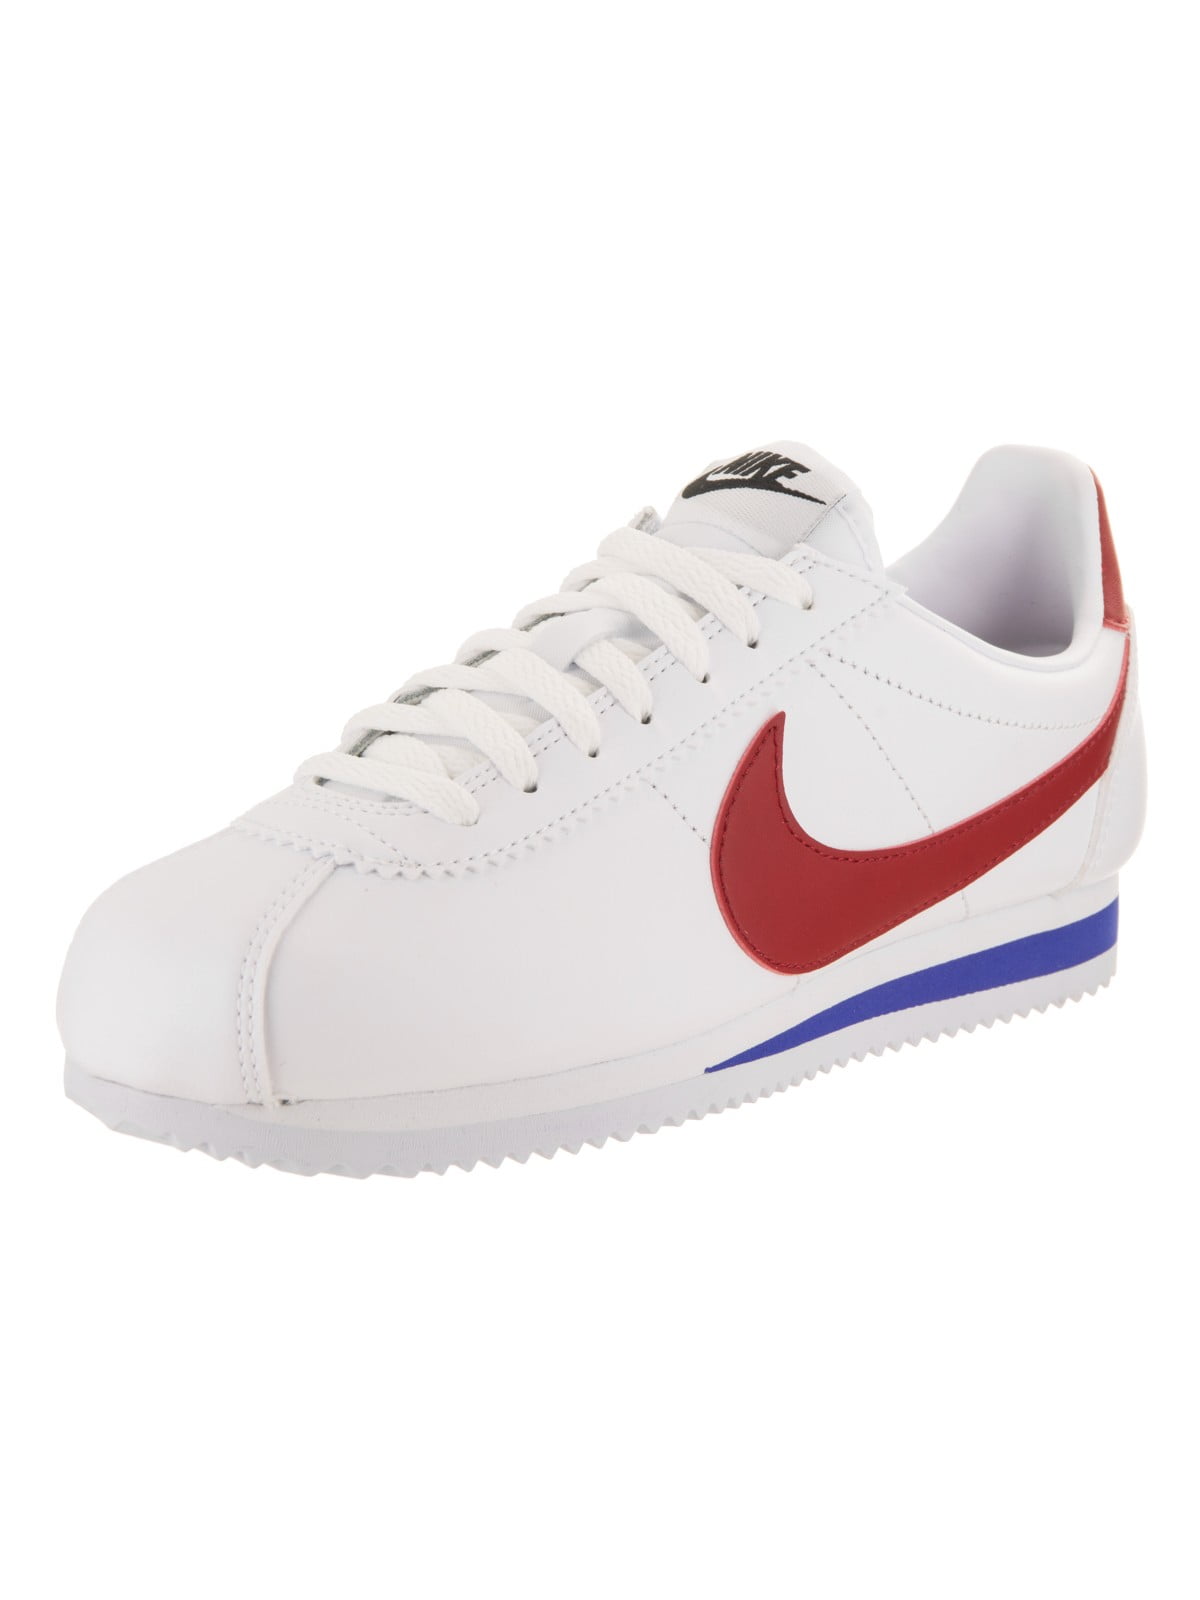 Nike Classic Cortez Leather White/Varsity Red 807471-103 Women's 6 Medium -